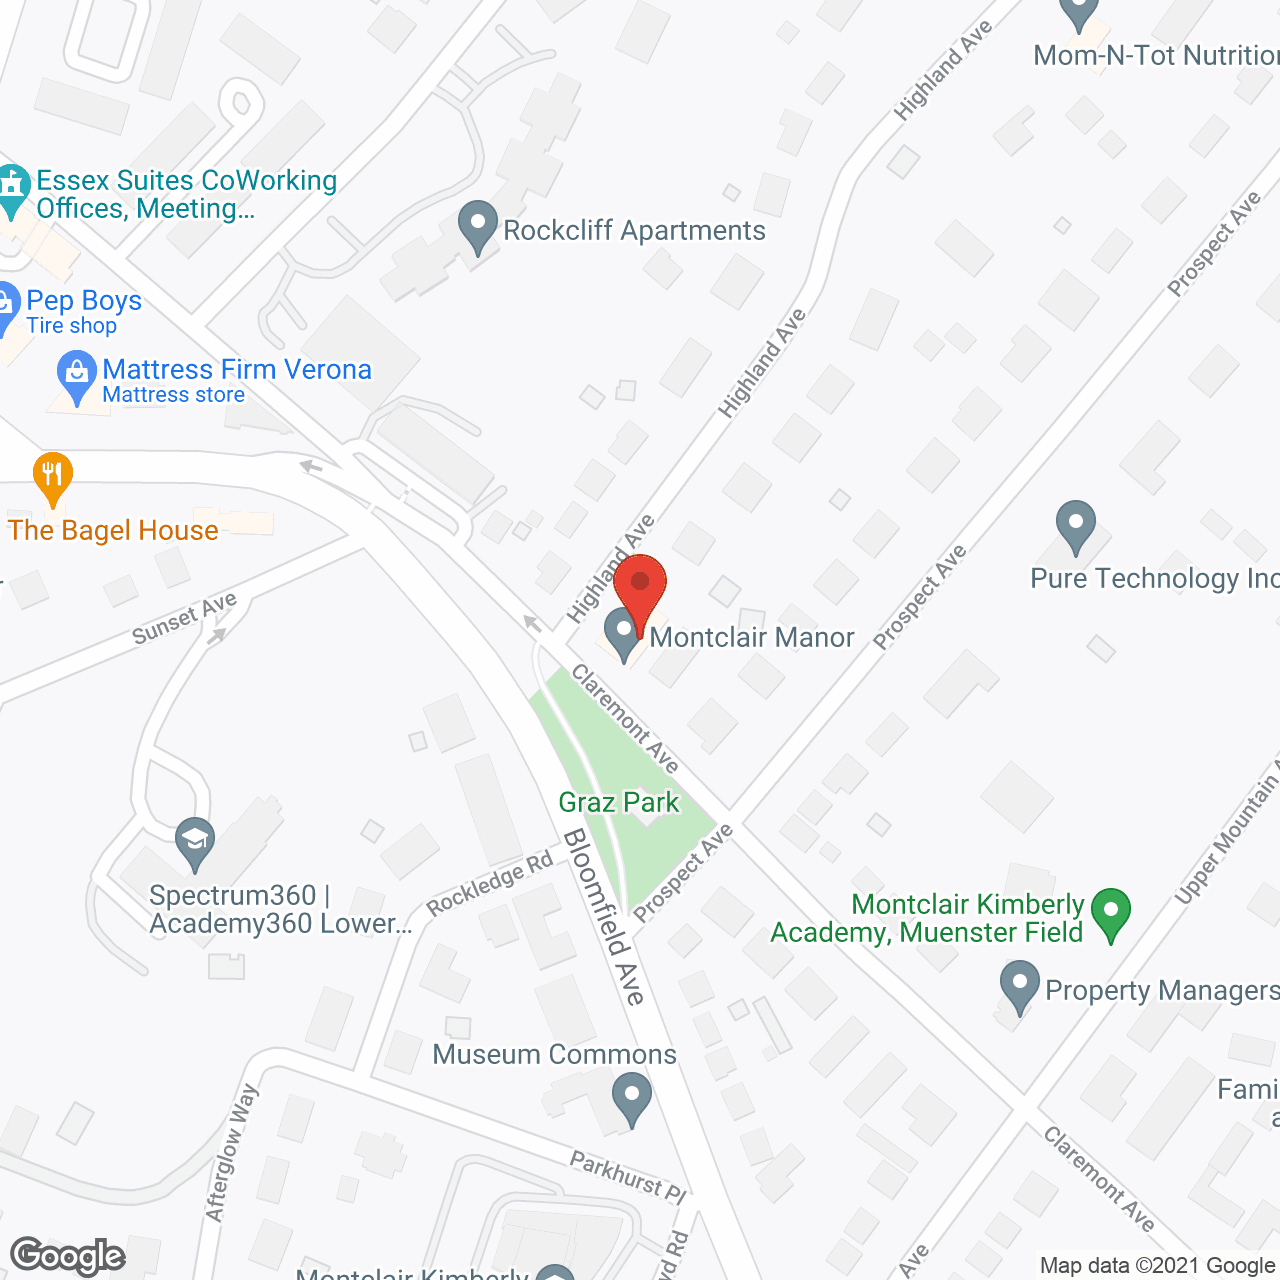 Montclair Manor in google map